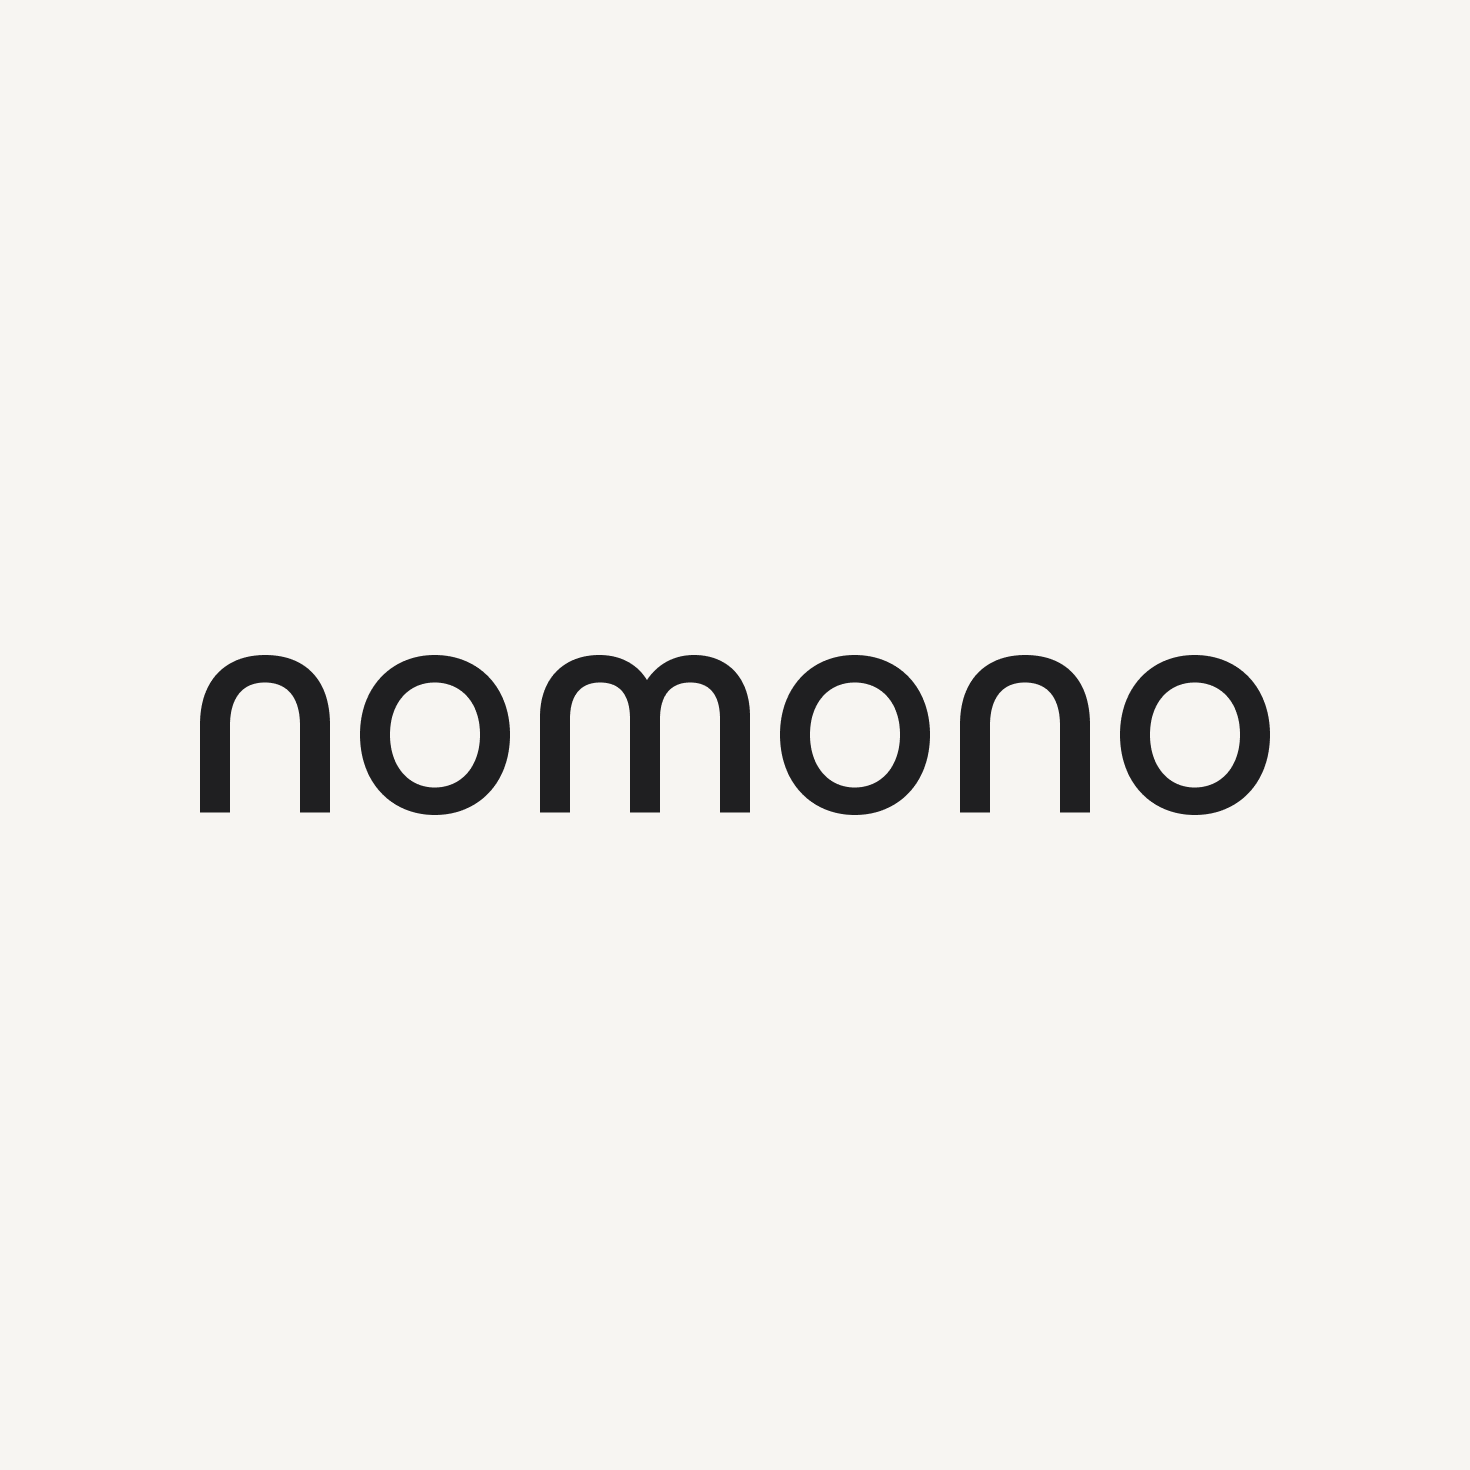 Investment funding for Norwegian spatial audio startup Nomono